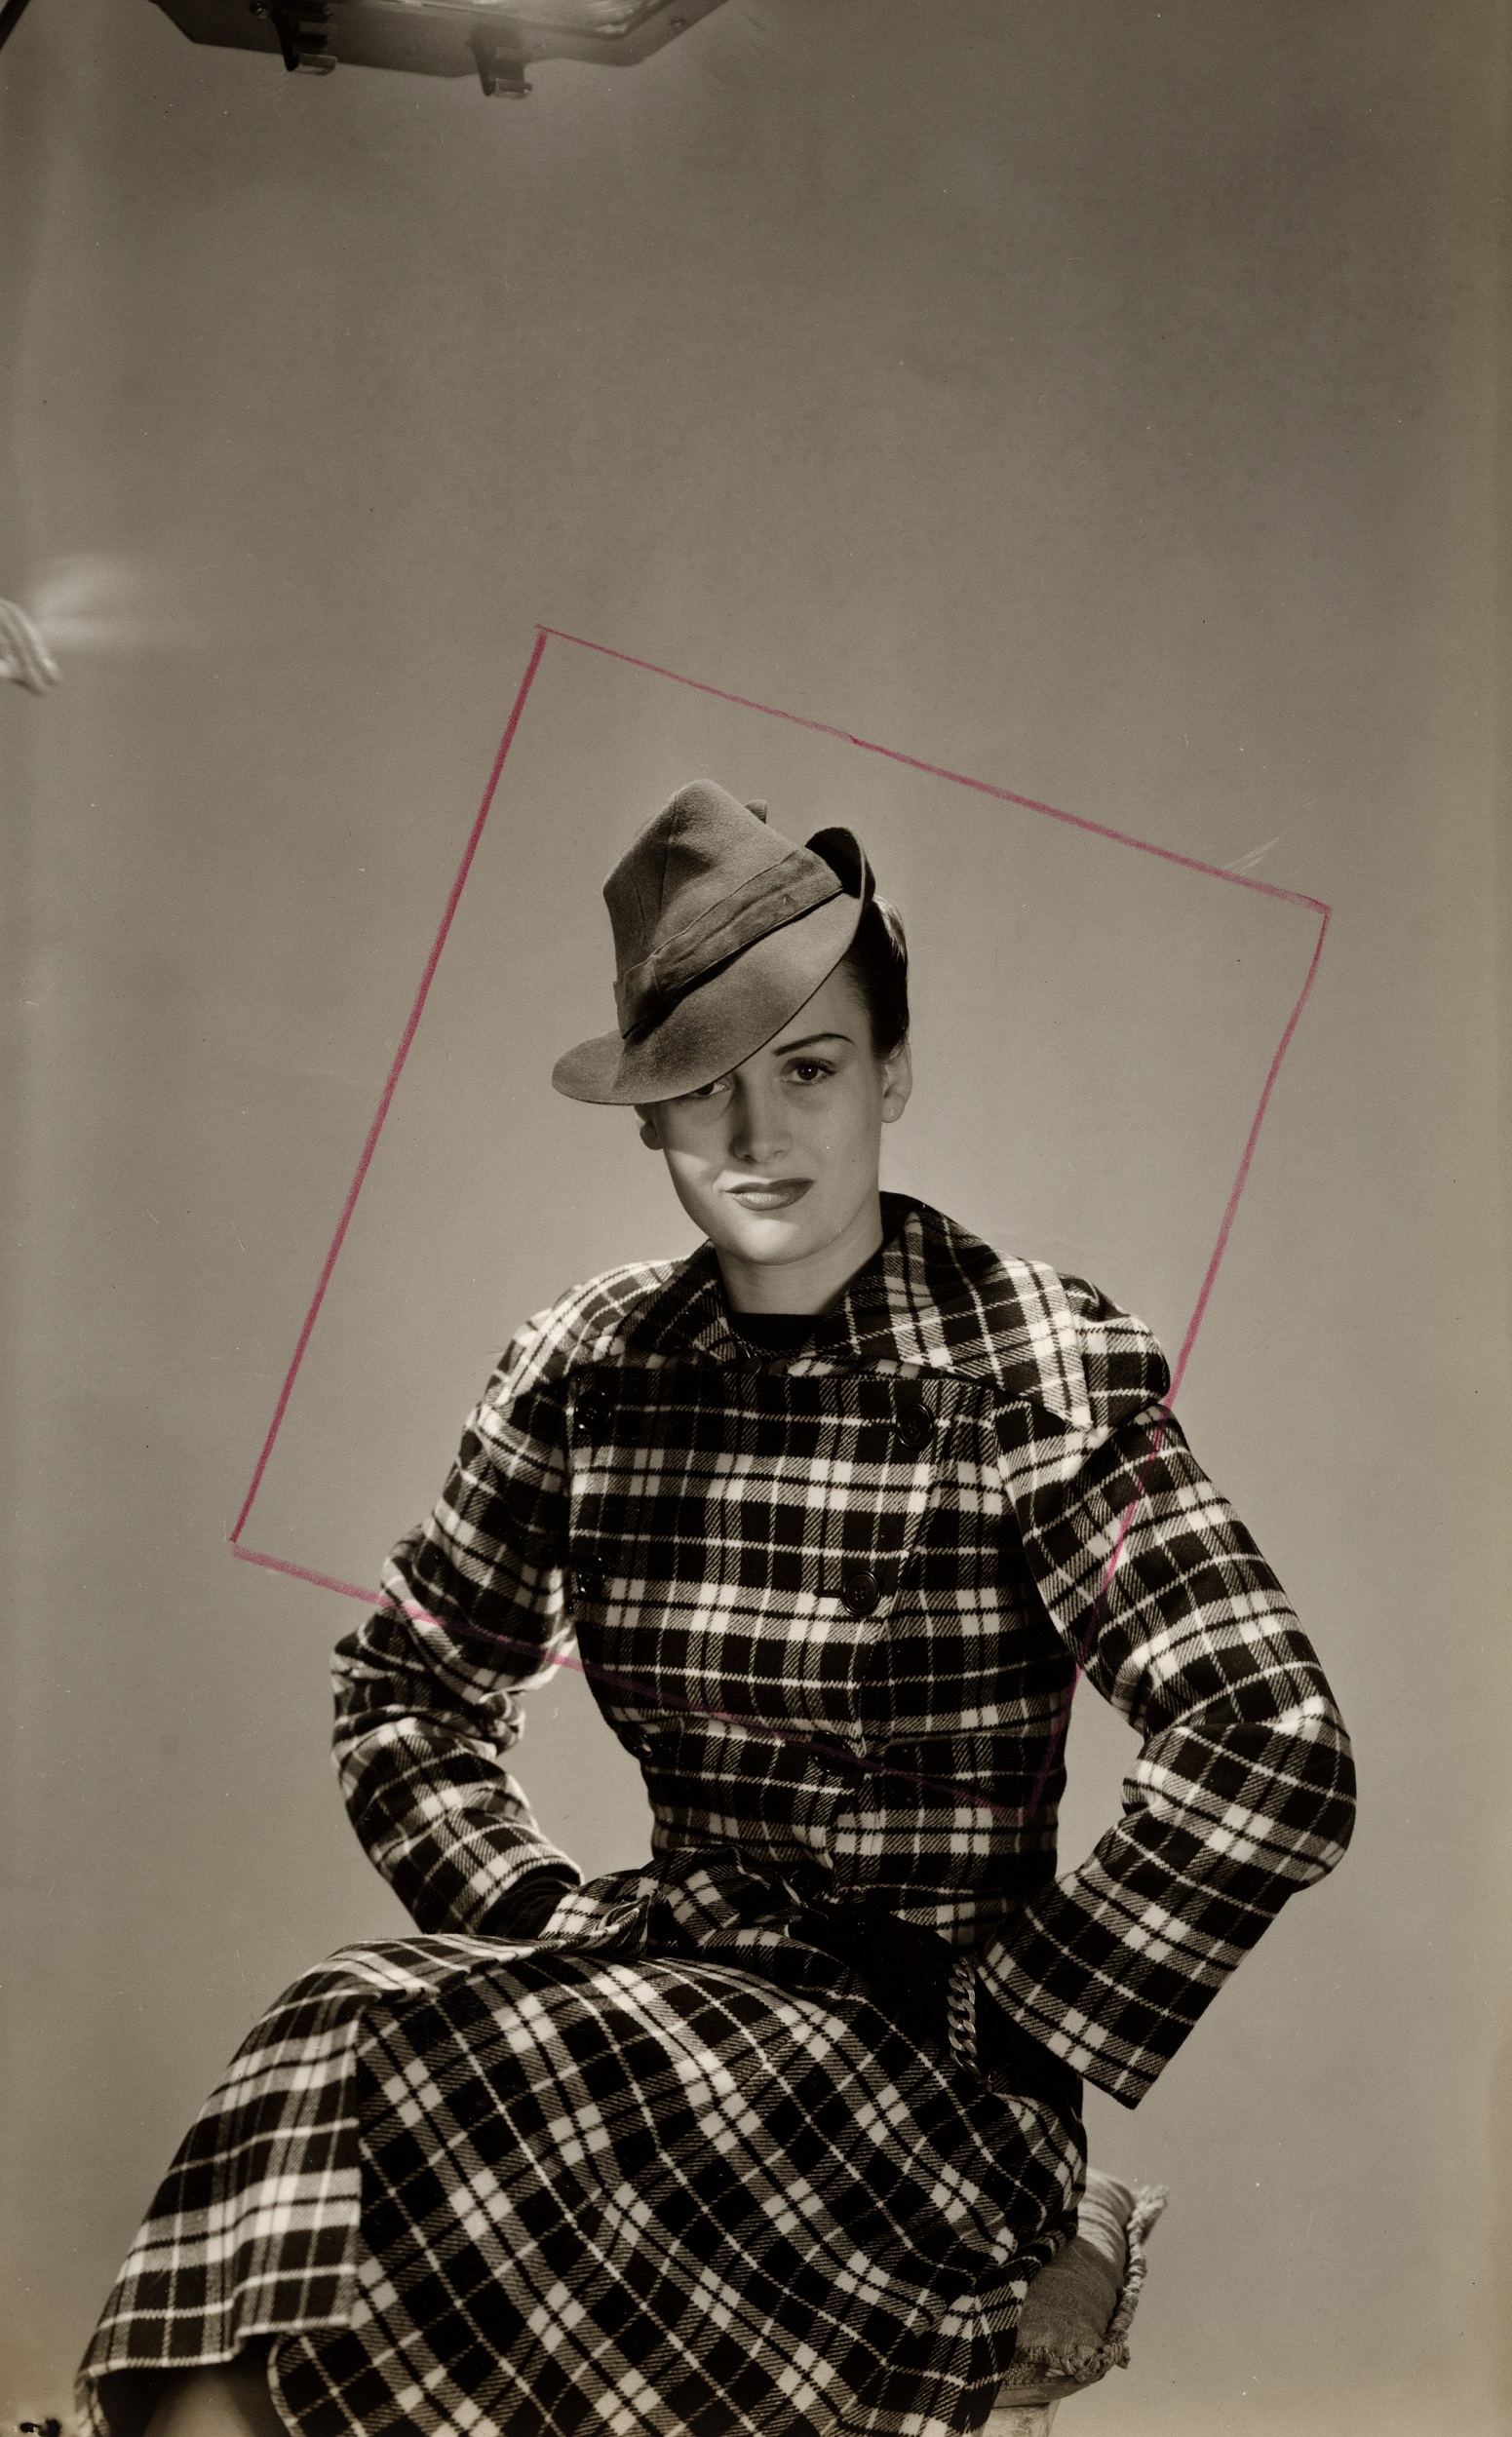 Hats, Pidoux, with original markings Vogue Studio, London, England, 1939. © Lee Miller Archives.